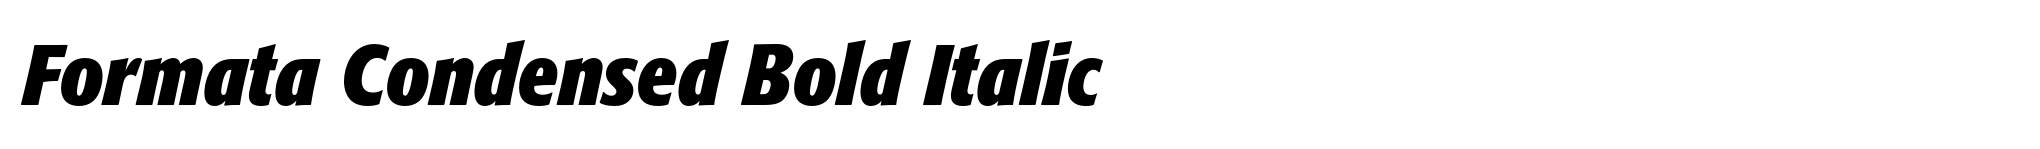 Formata Condensed Bold Italic image